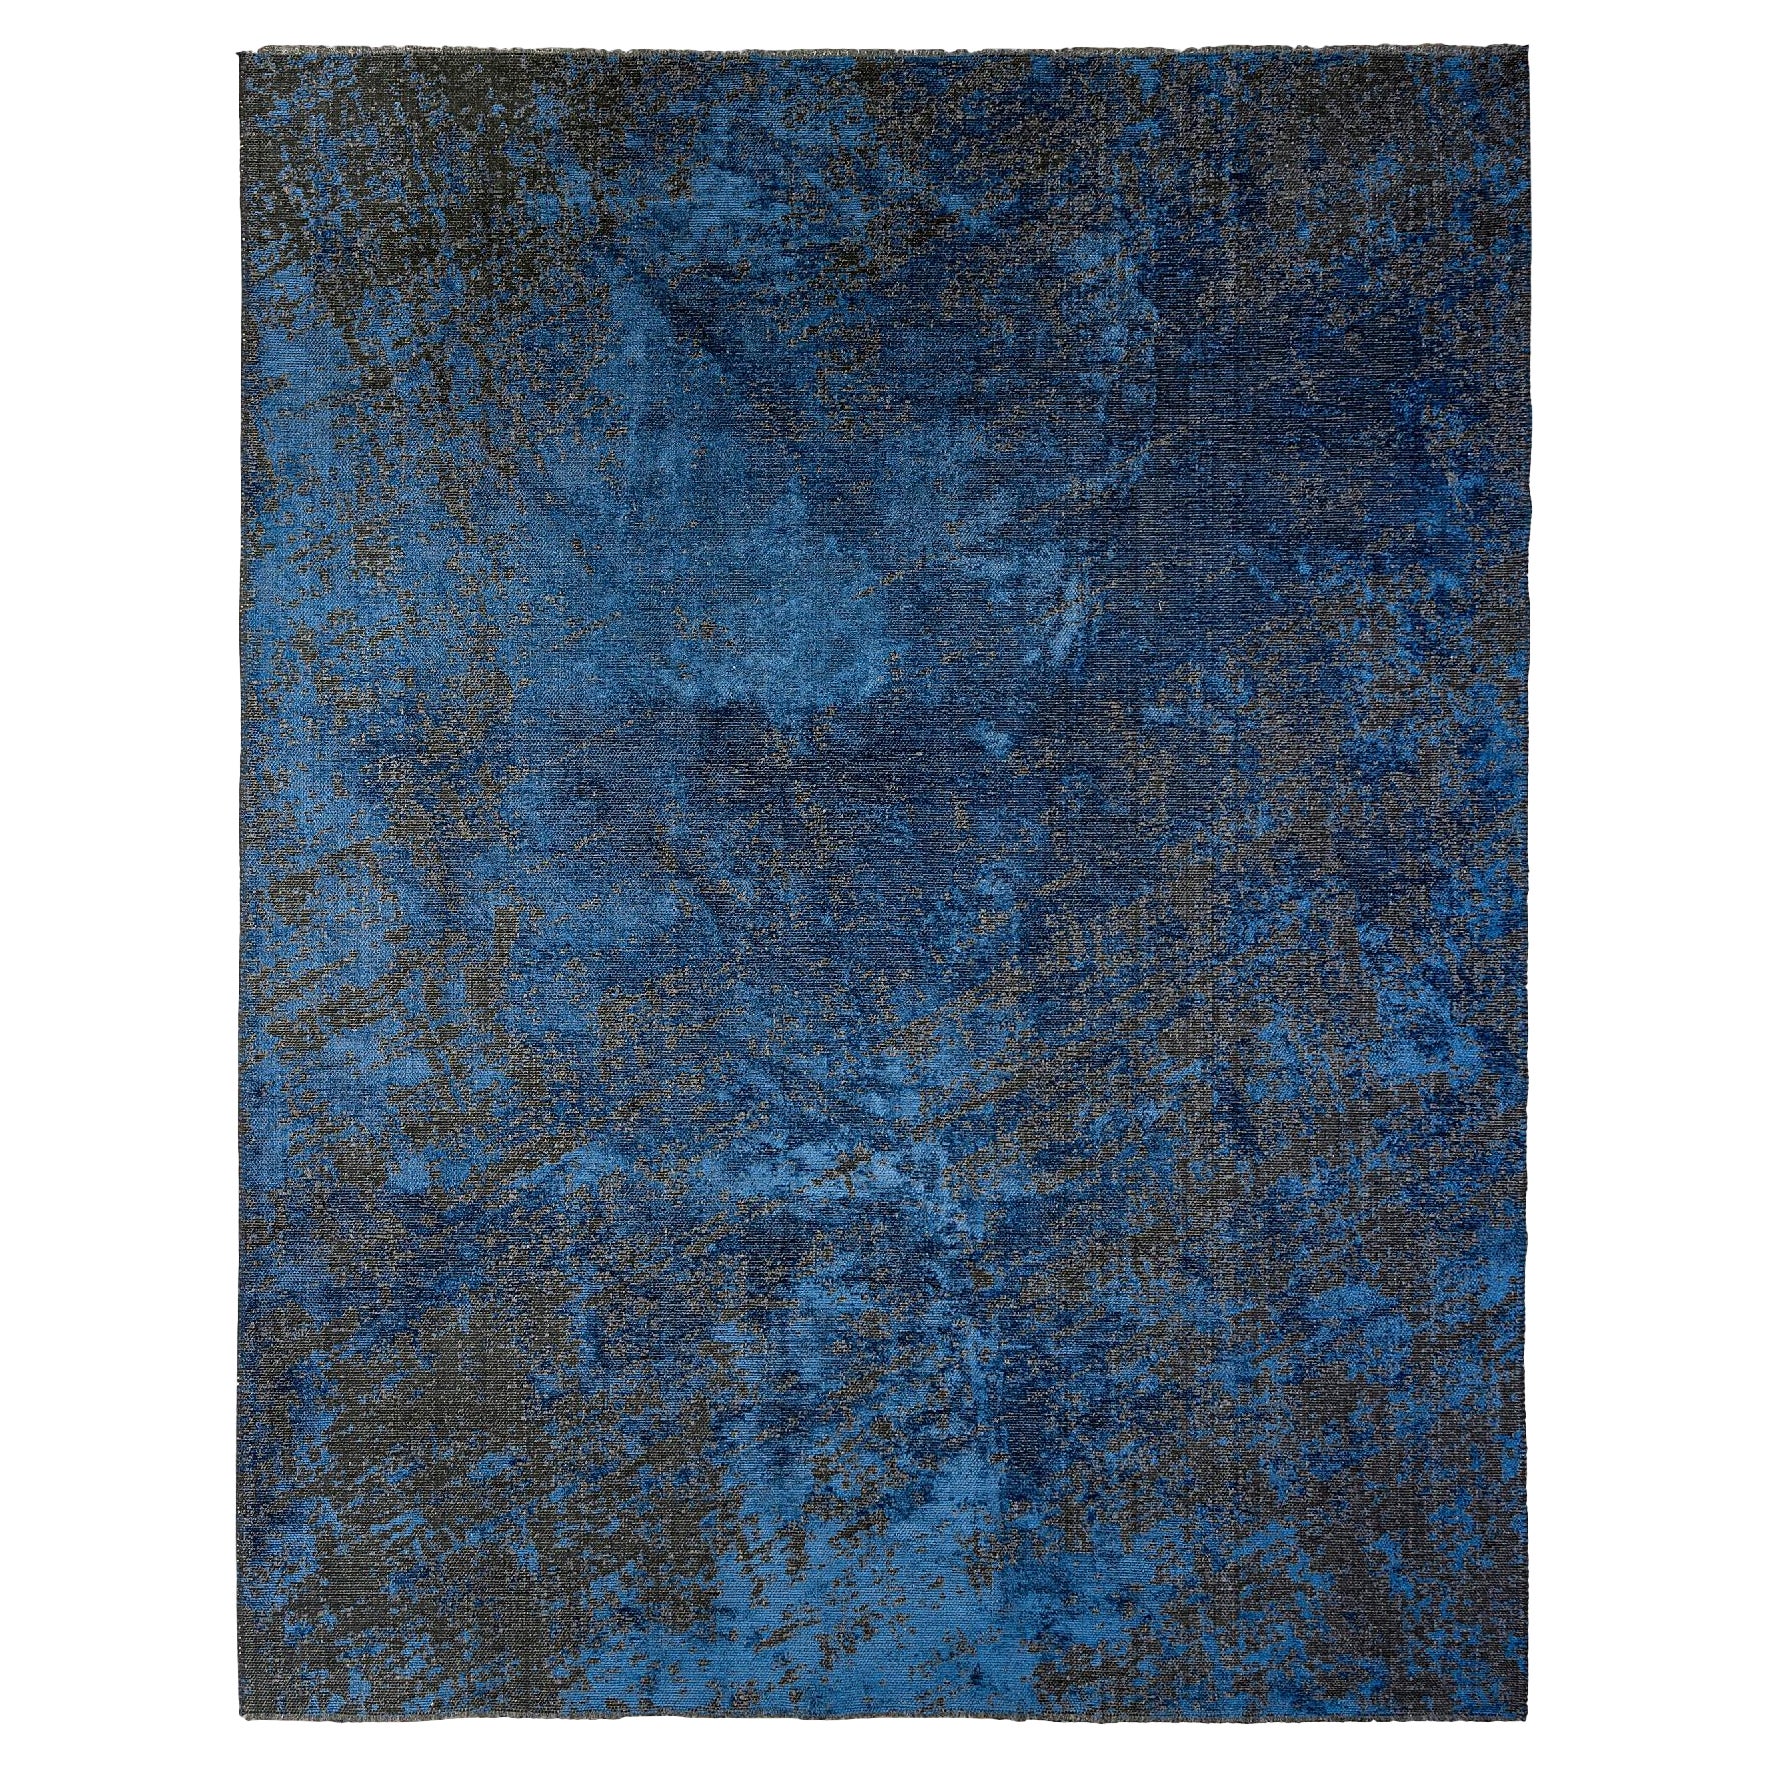 En vente :  (Bleu) Moderne  Tapis de sol abstrait de luxe